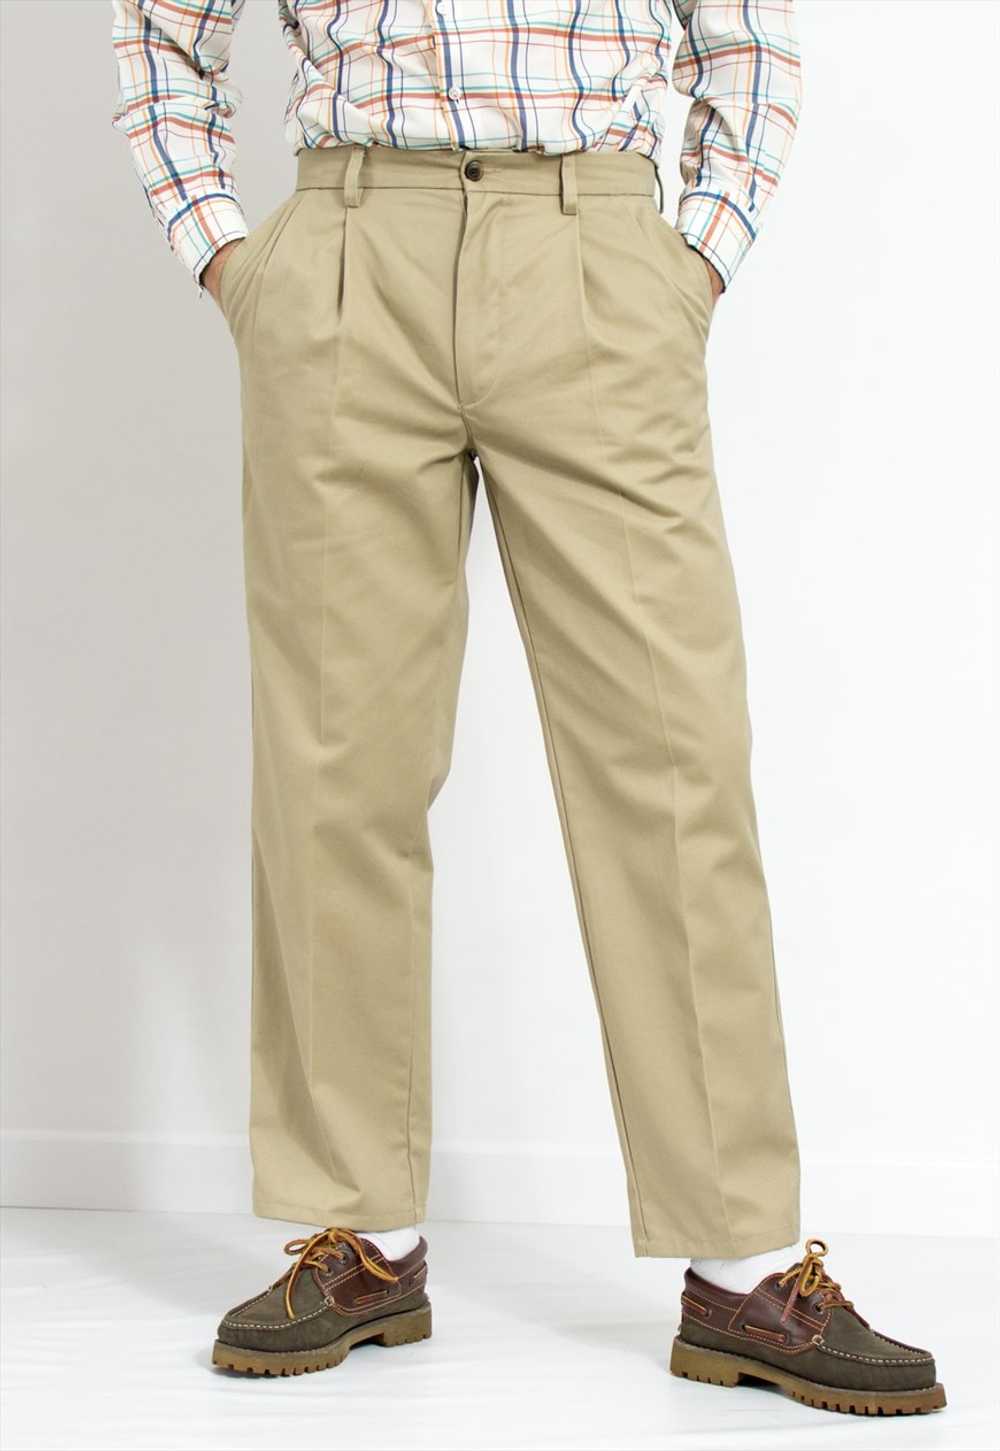 St. John's Bay Vintage pleated pants in beige siz… - image 4